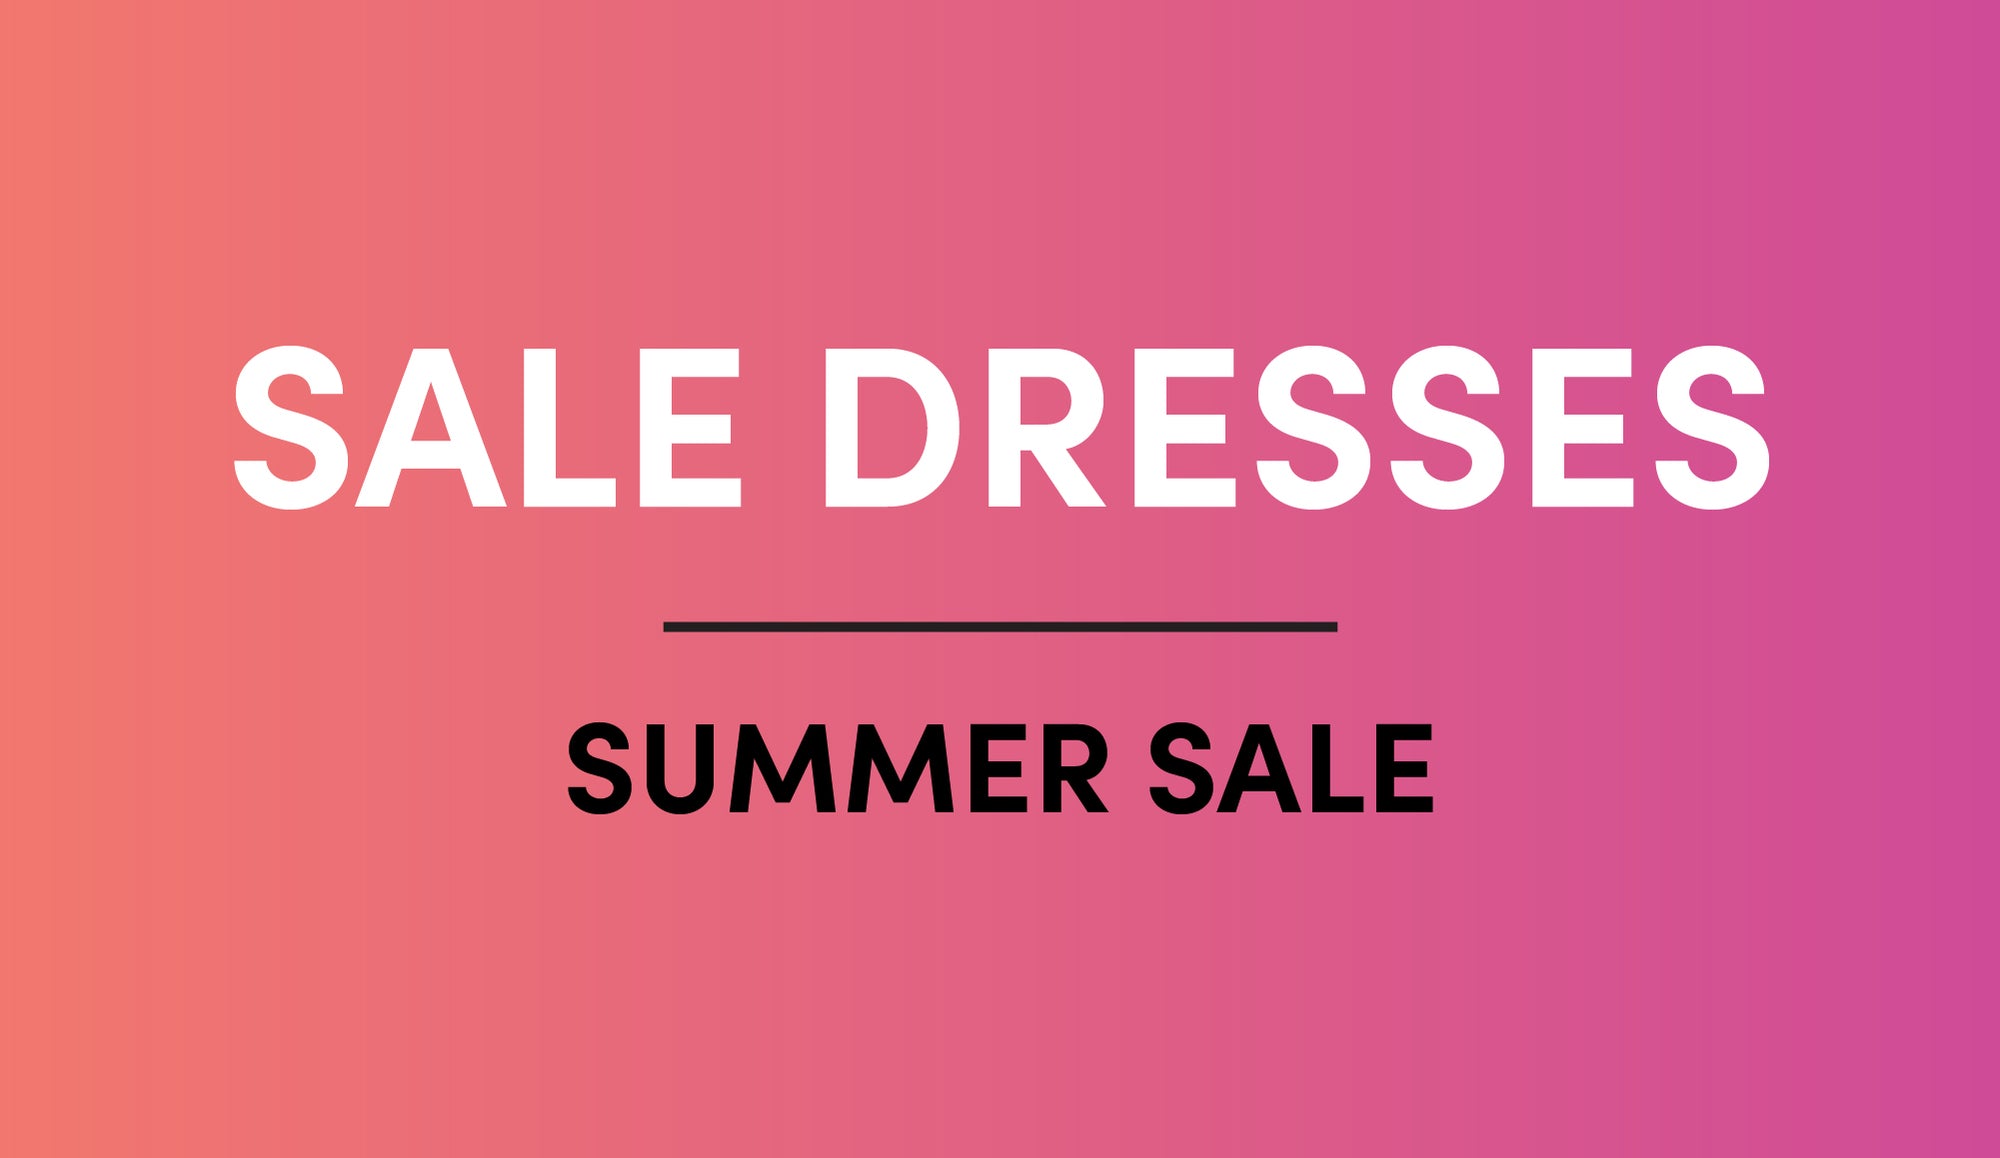 Summer Sale Dresses